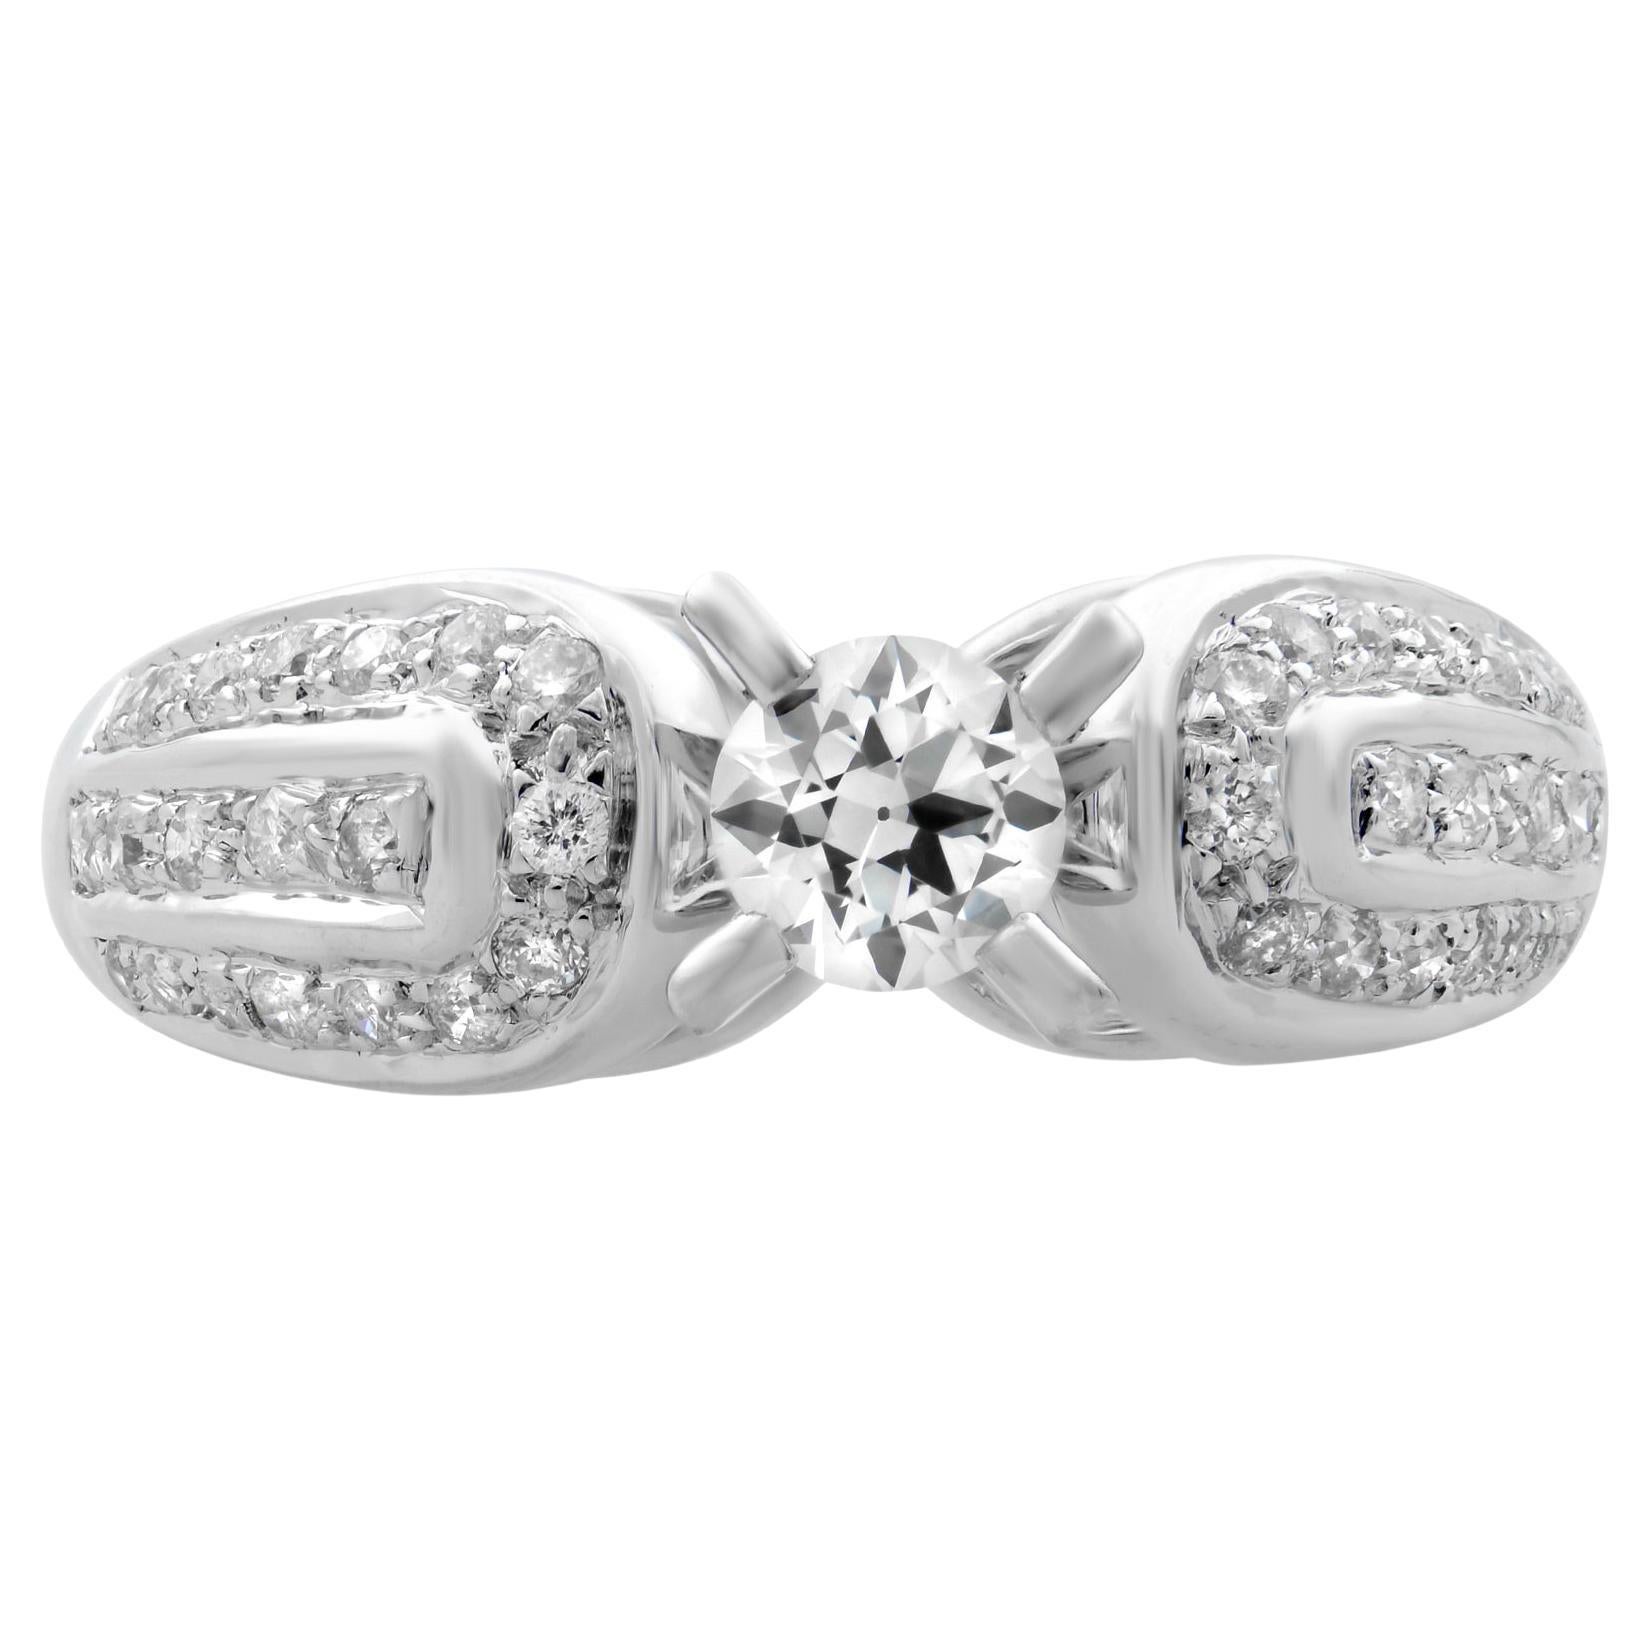 Rachel Koen Bague de fiançailles en or blanc 14 carats avec diamants de 0,50 carat